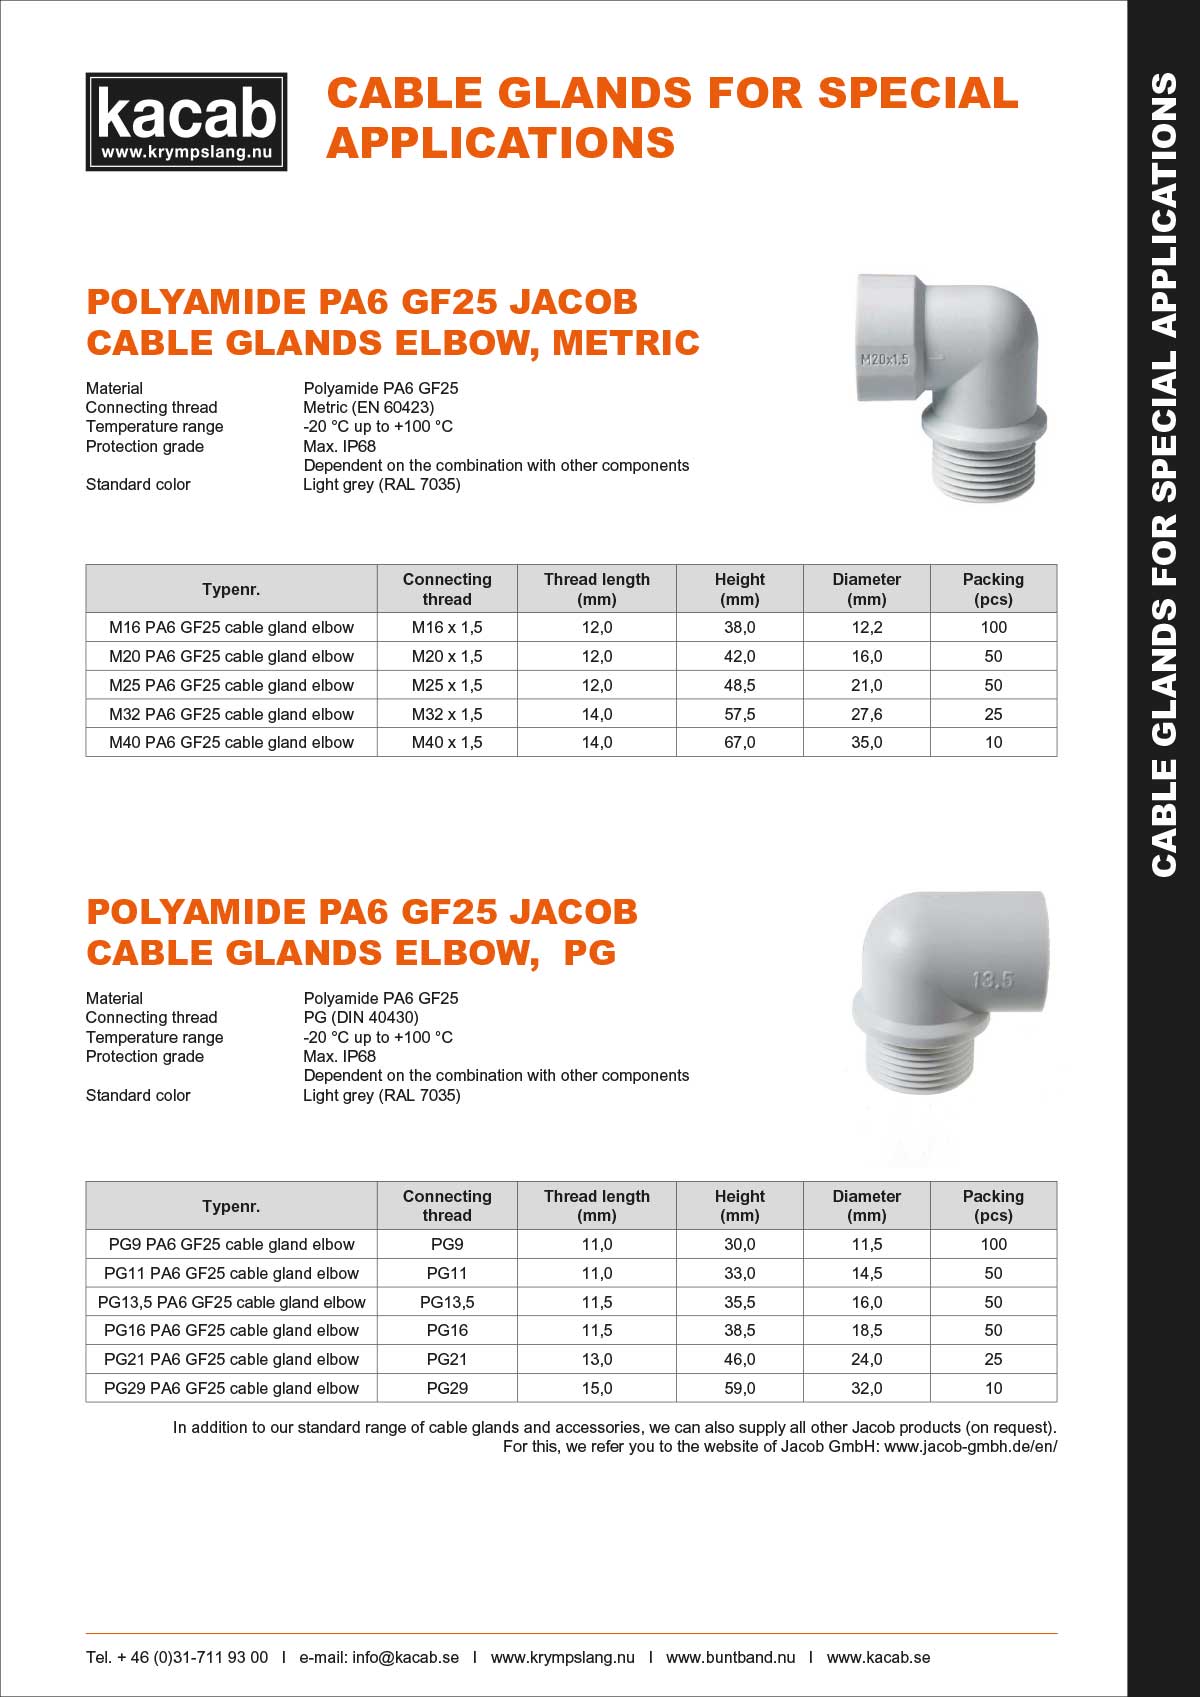 Polyamide PA6 GF25 Jacob cable glands elbow-PG